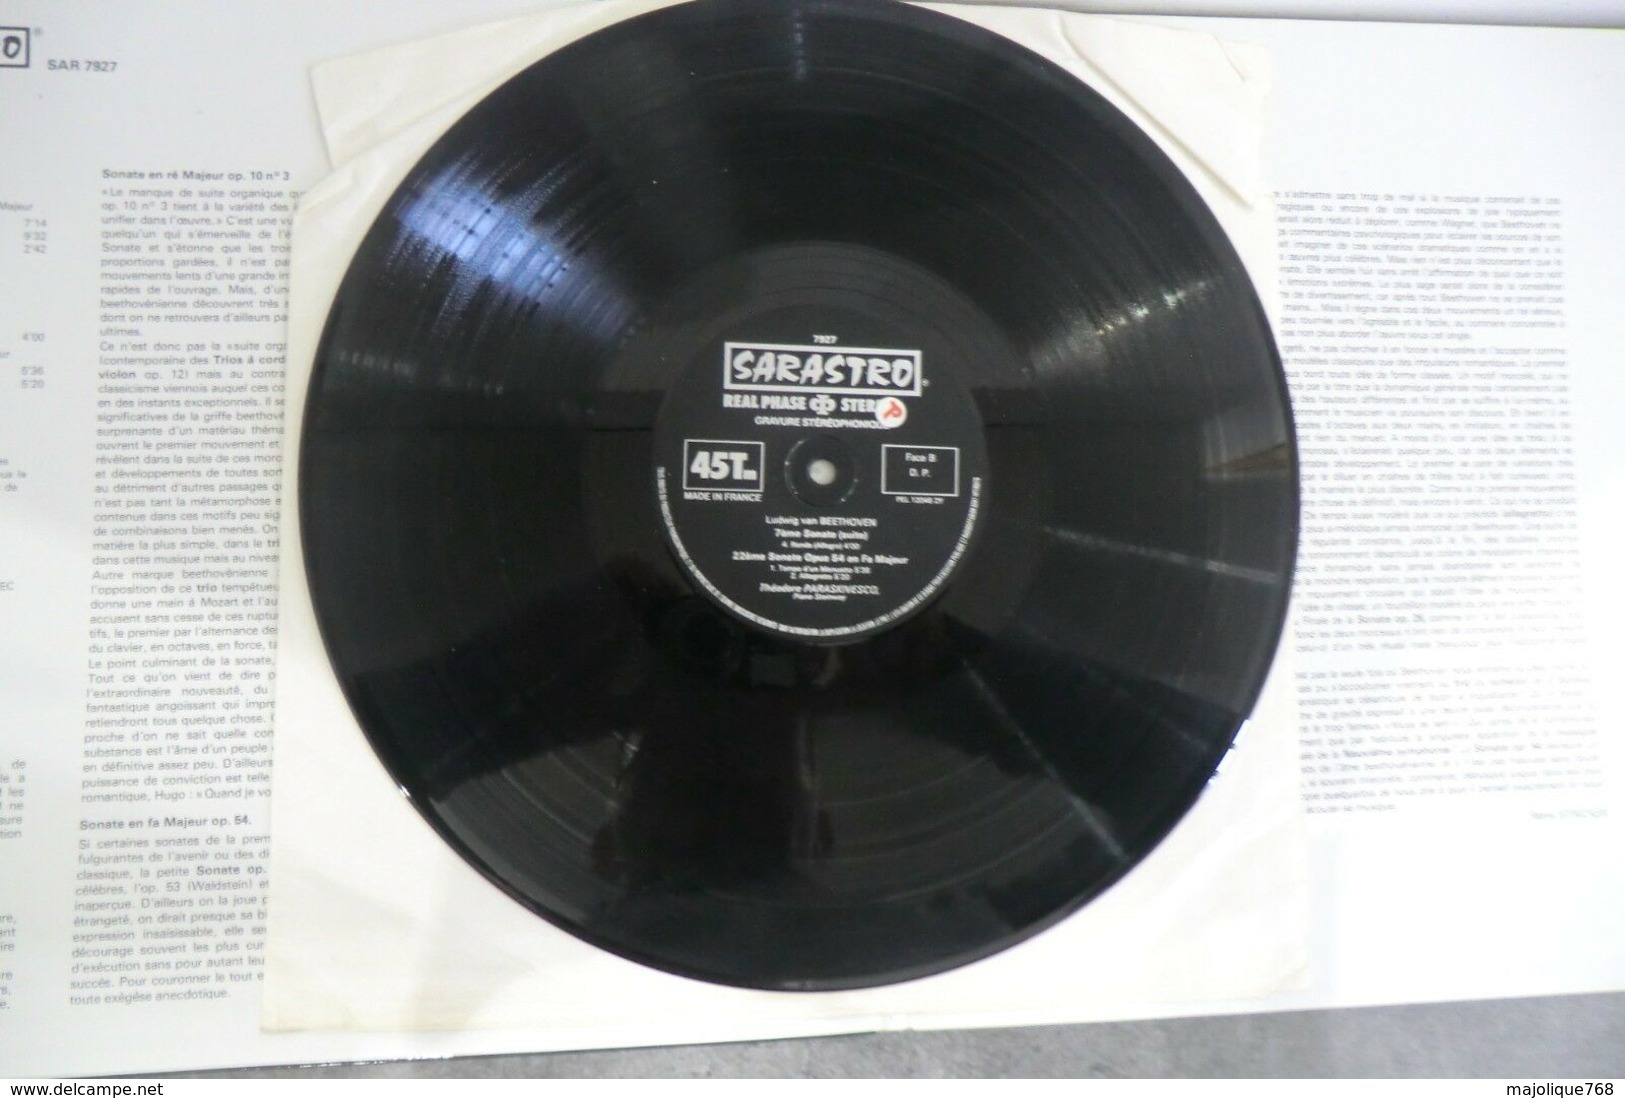 disque-Théodore paraskivesco - sonate N°7 opus de beethoven - sarastro sar 7927 - 45 LP - 1978 sous plastique -